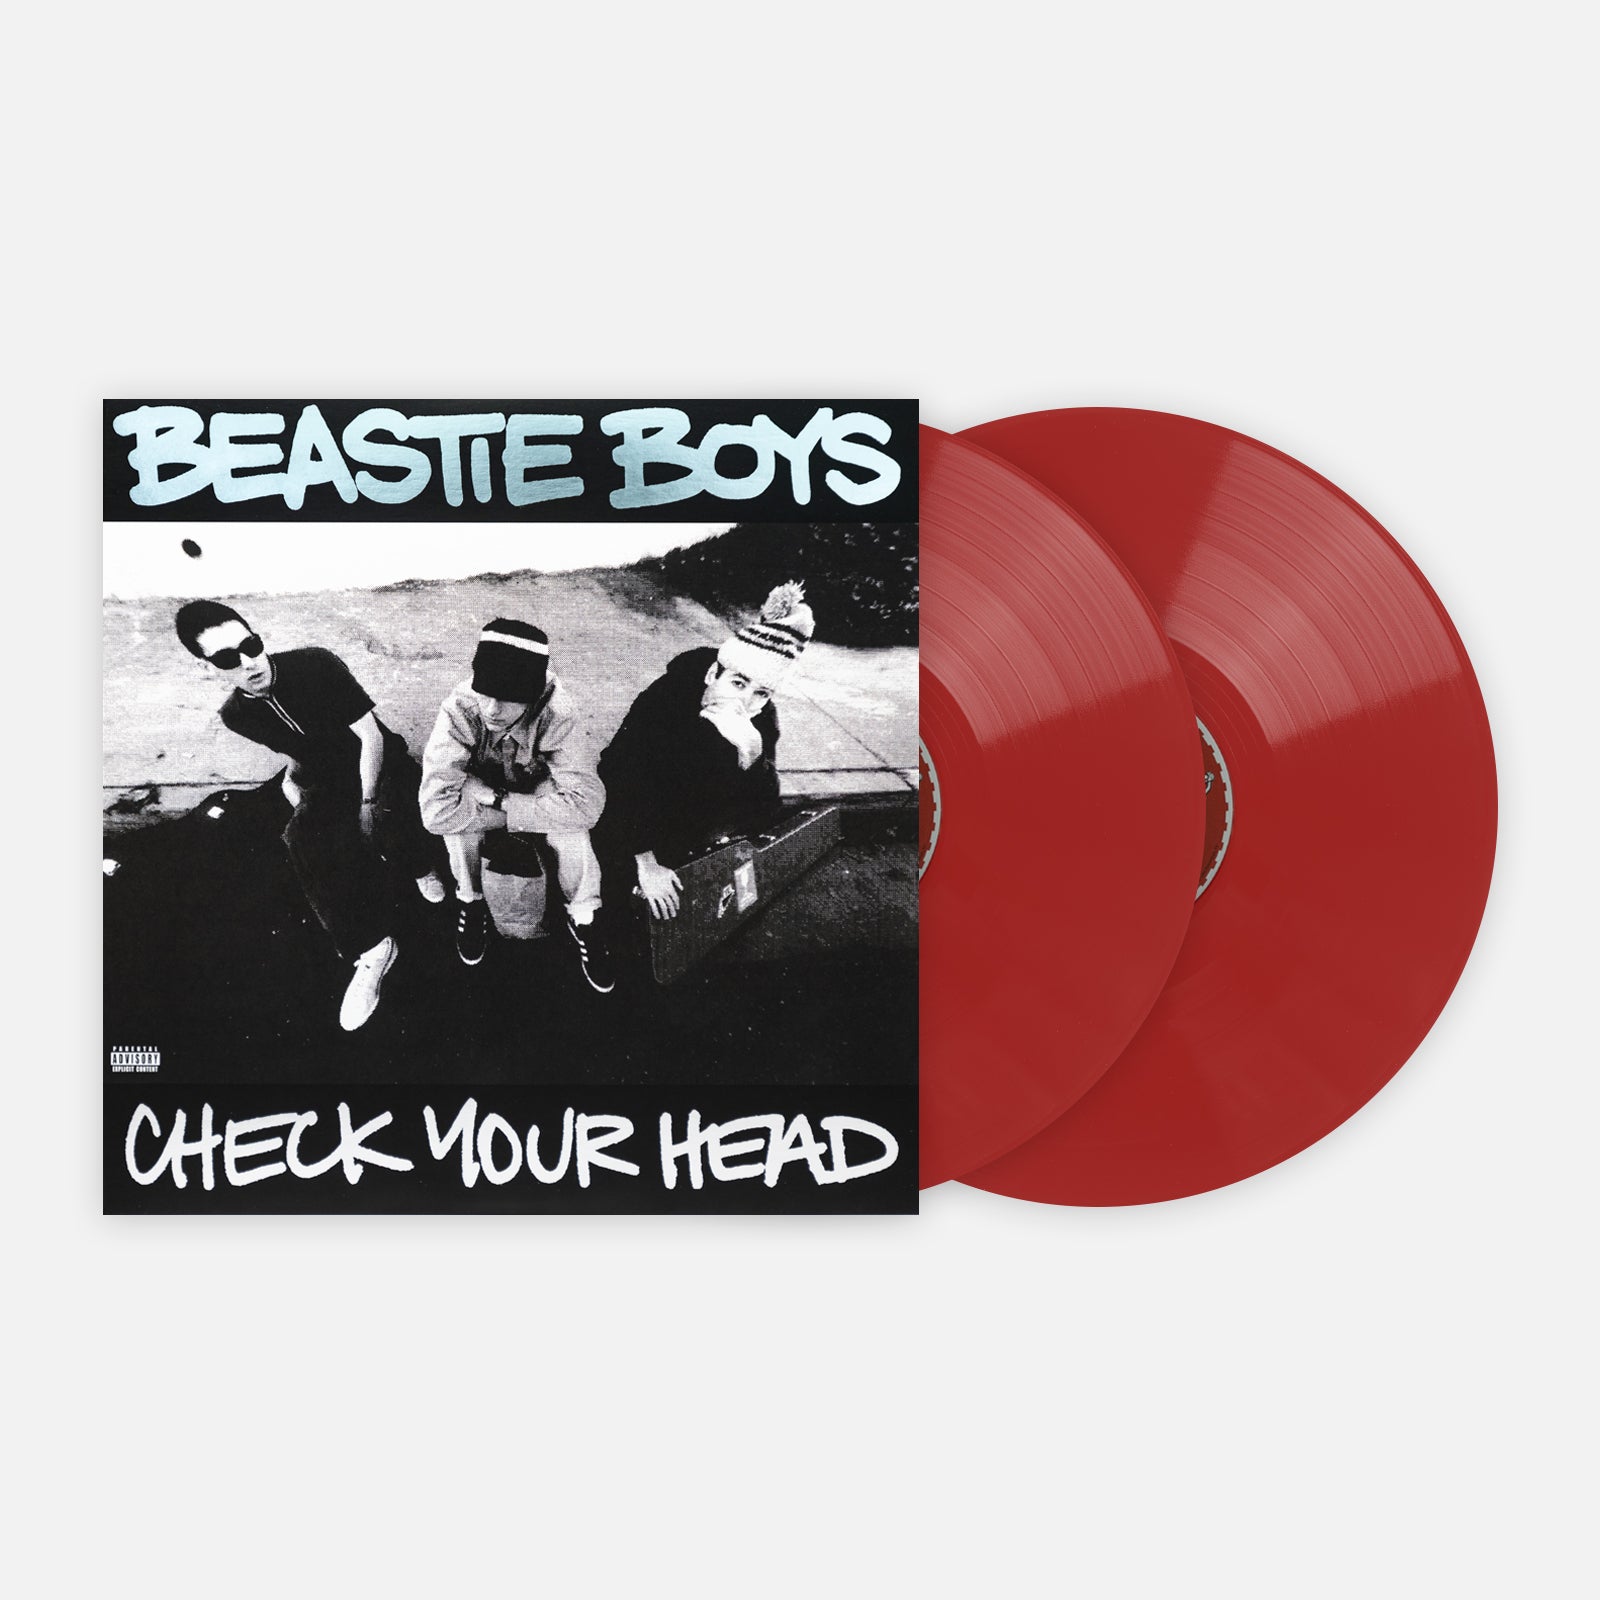 Beastie Boys 'Check Your Head' - Me,